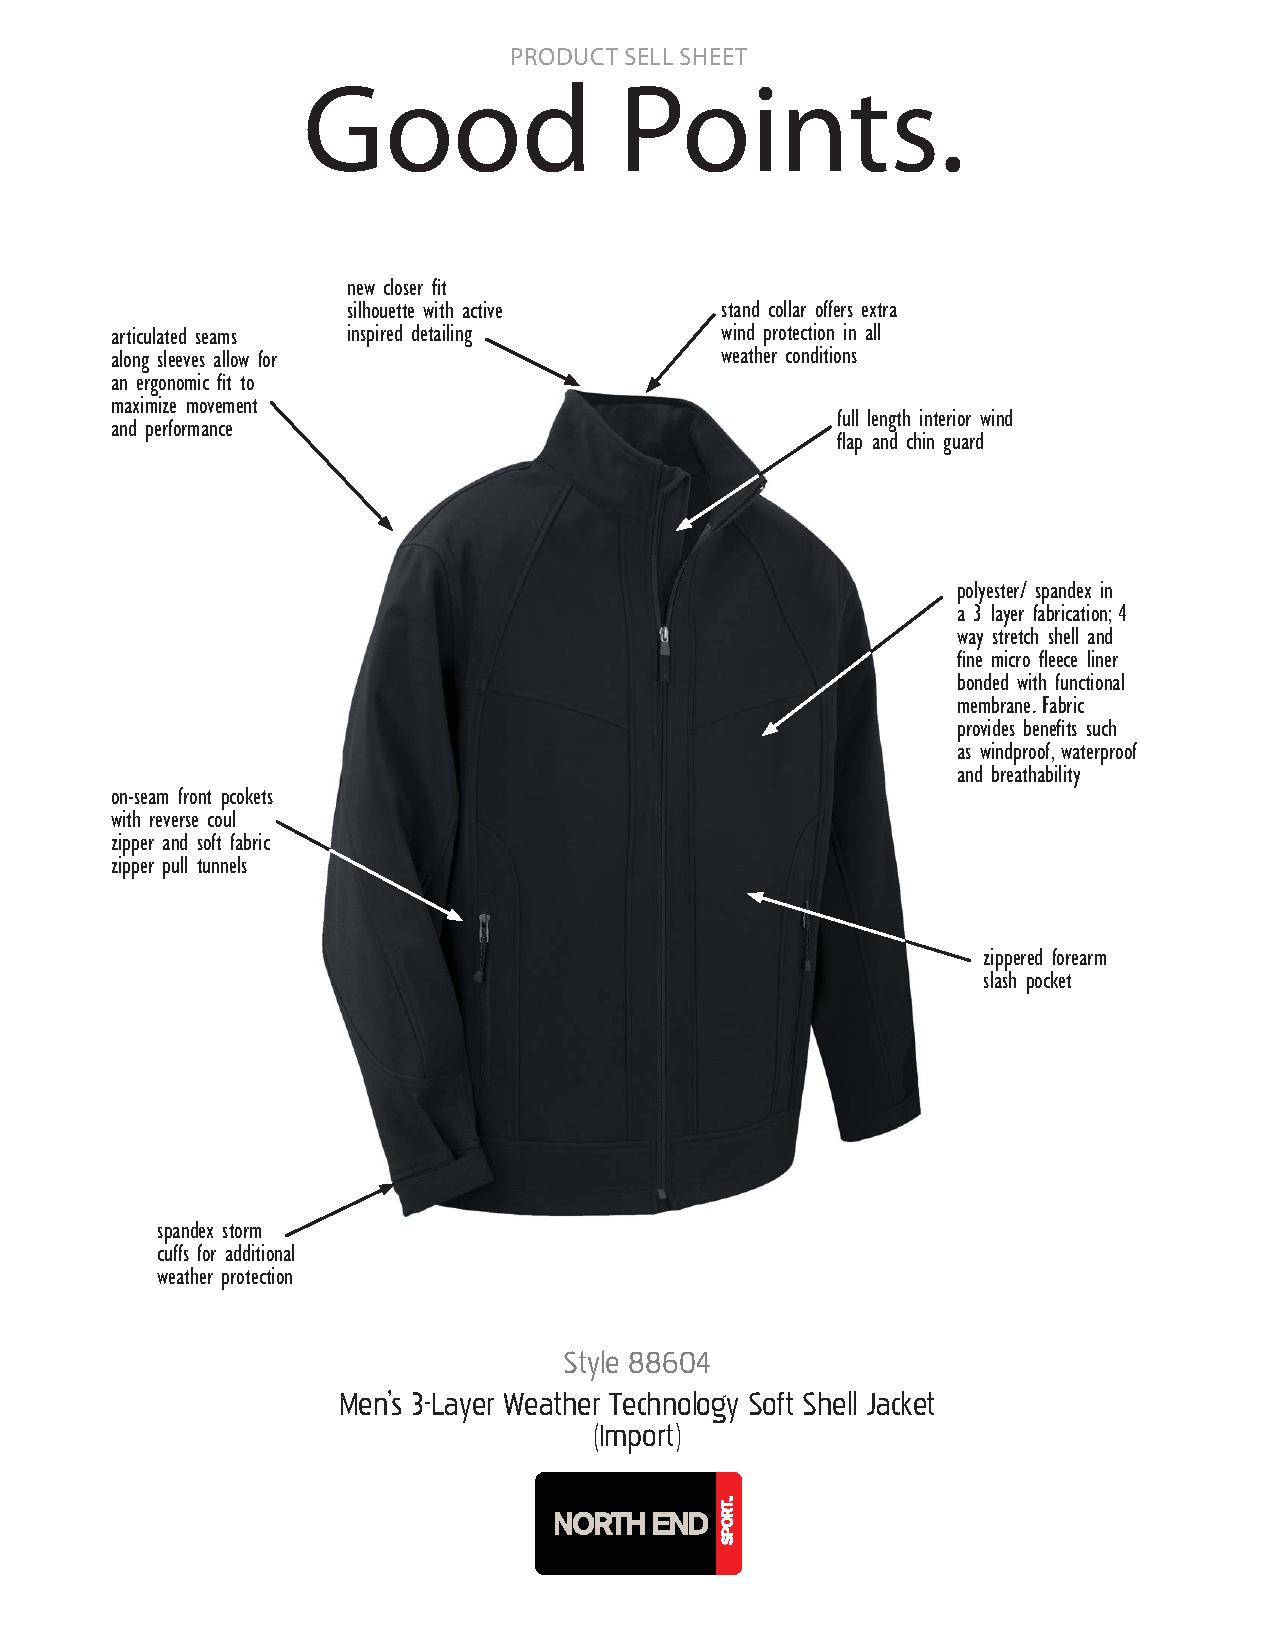 Ash City UTK 1 Warm.Logik 88604 - Men's 3-Layer Soft Shell Jacket